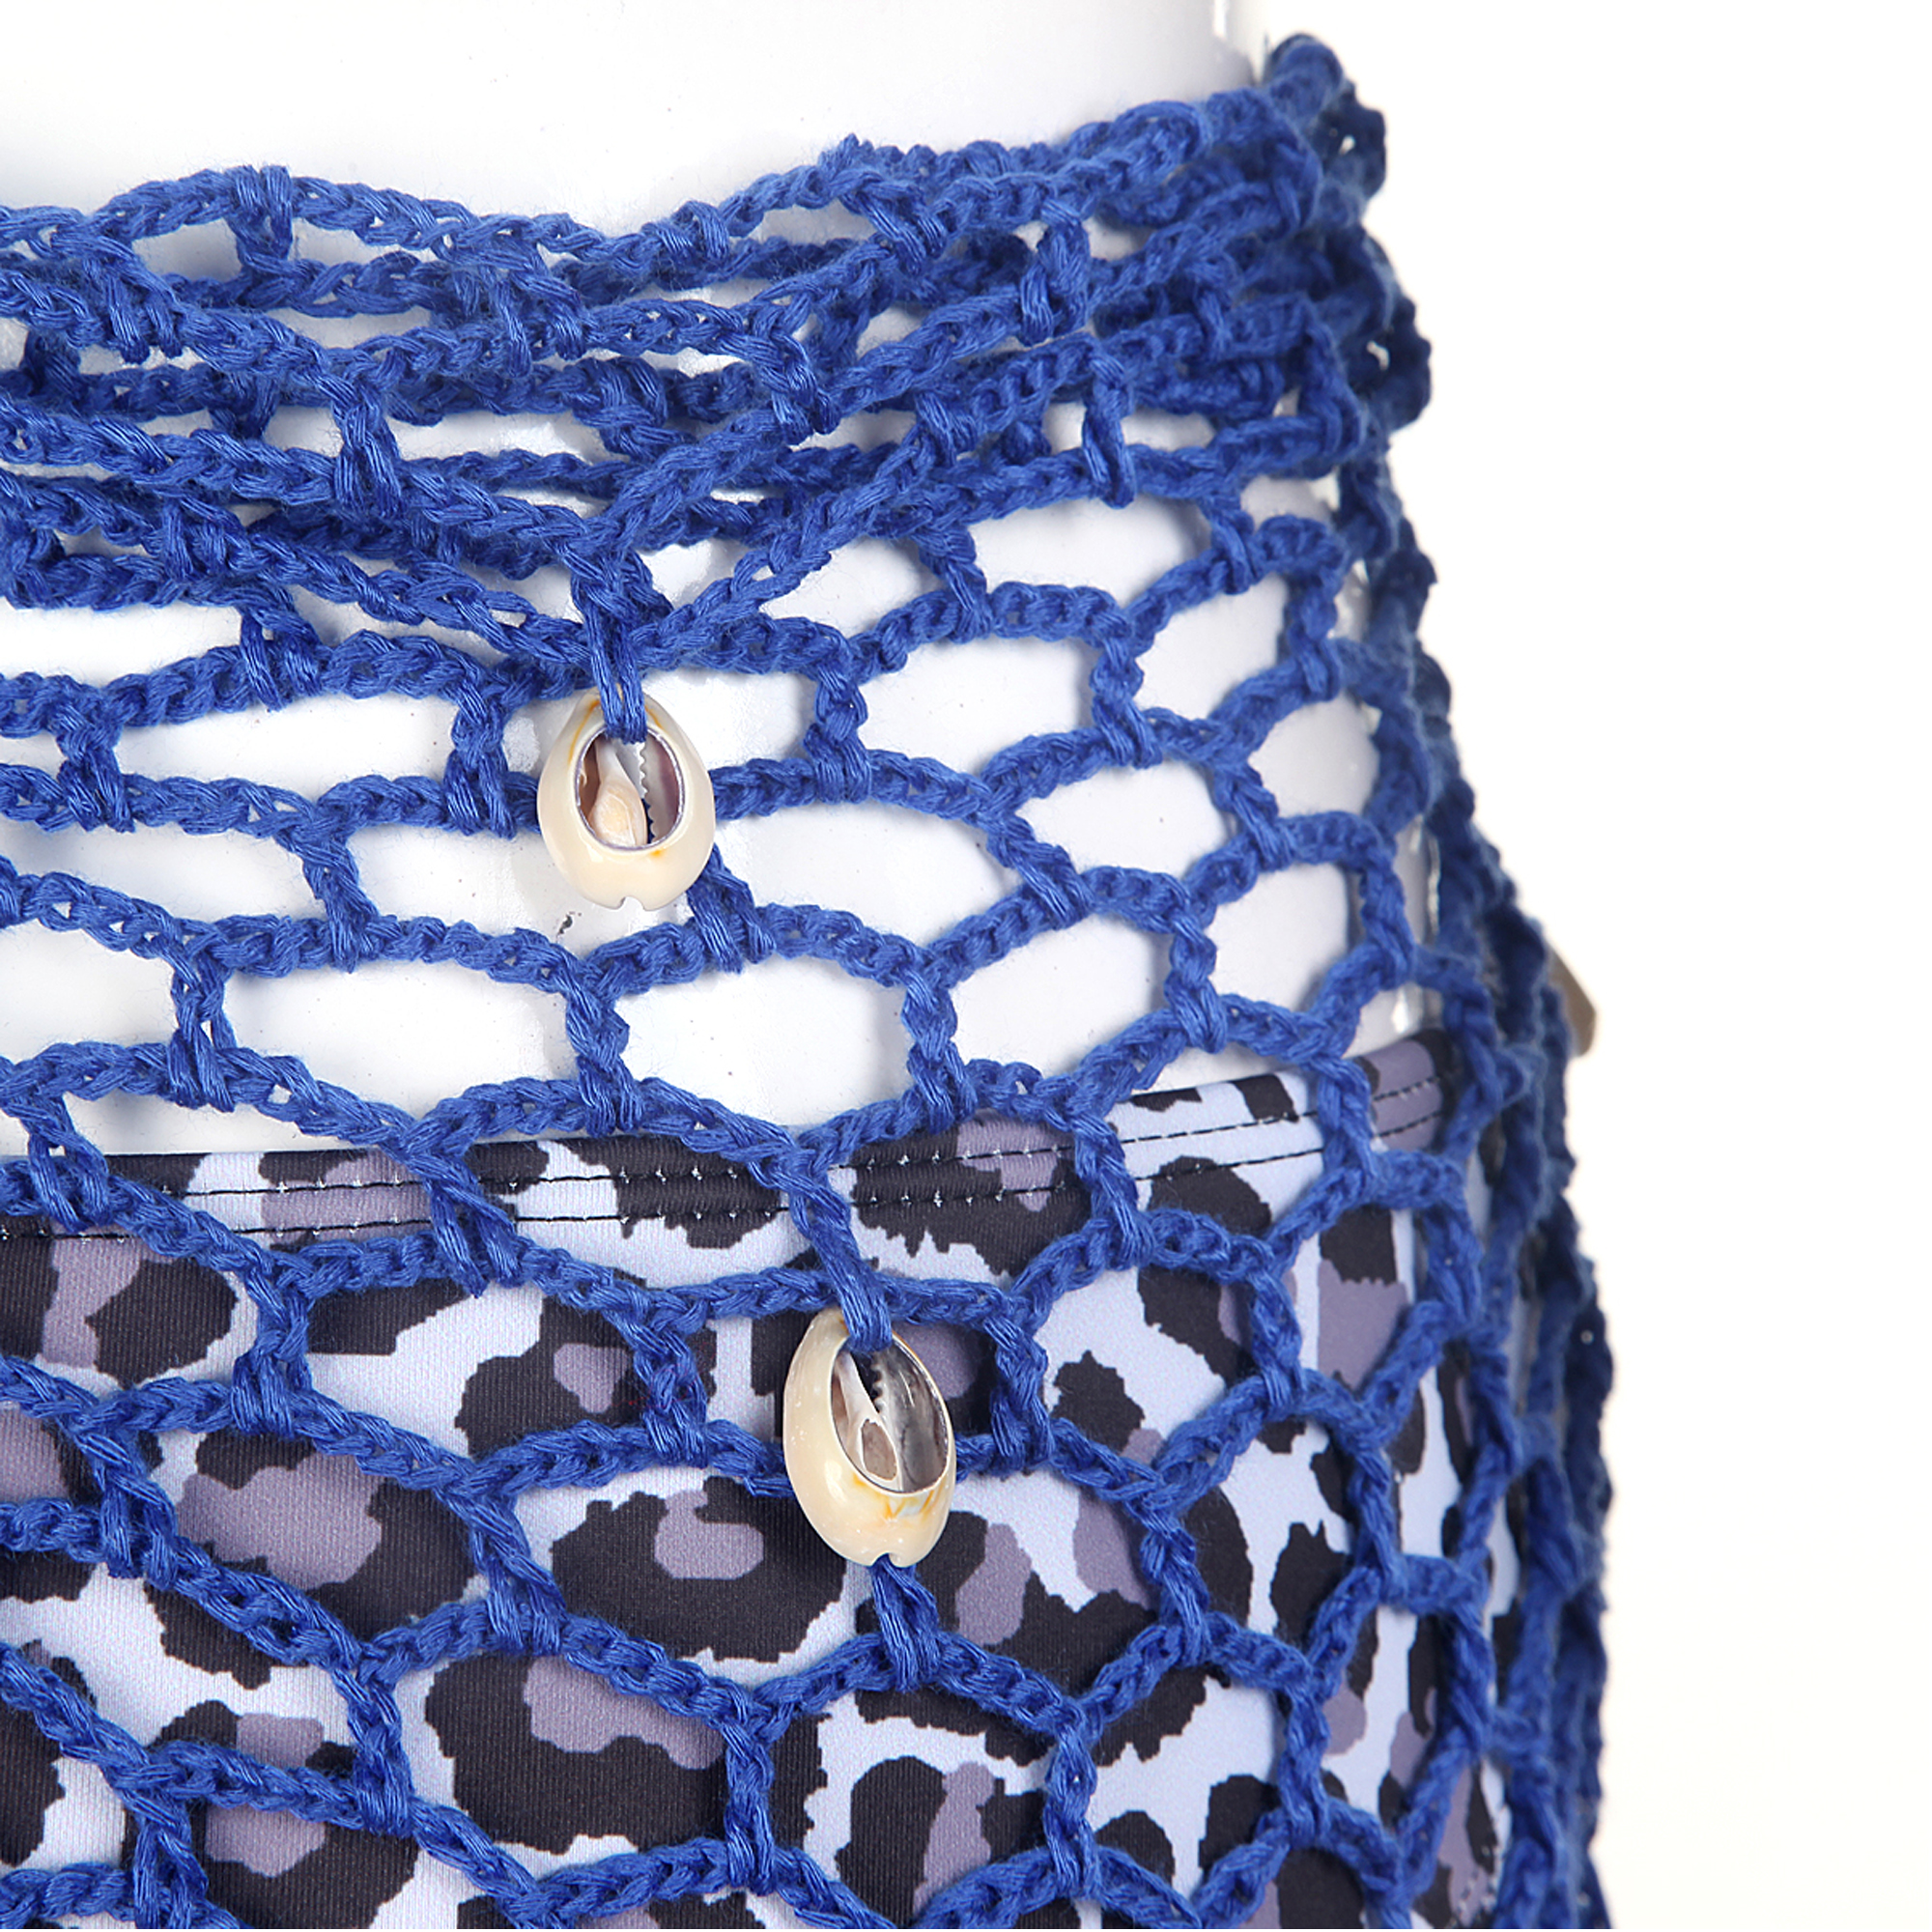 Dewadbow Women Crochet Fishnet Bikini Cover Ups Shell Beach Scarf Mesh Swimwear - image 5 of 6